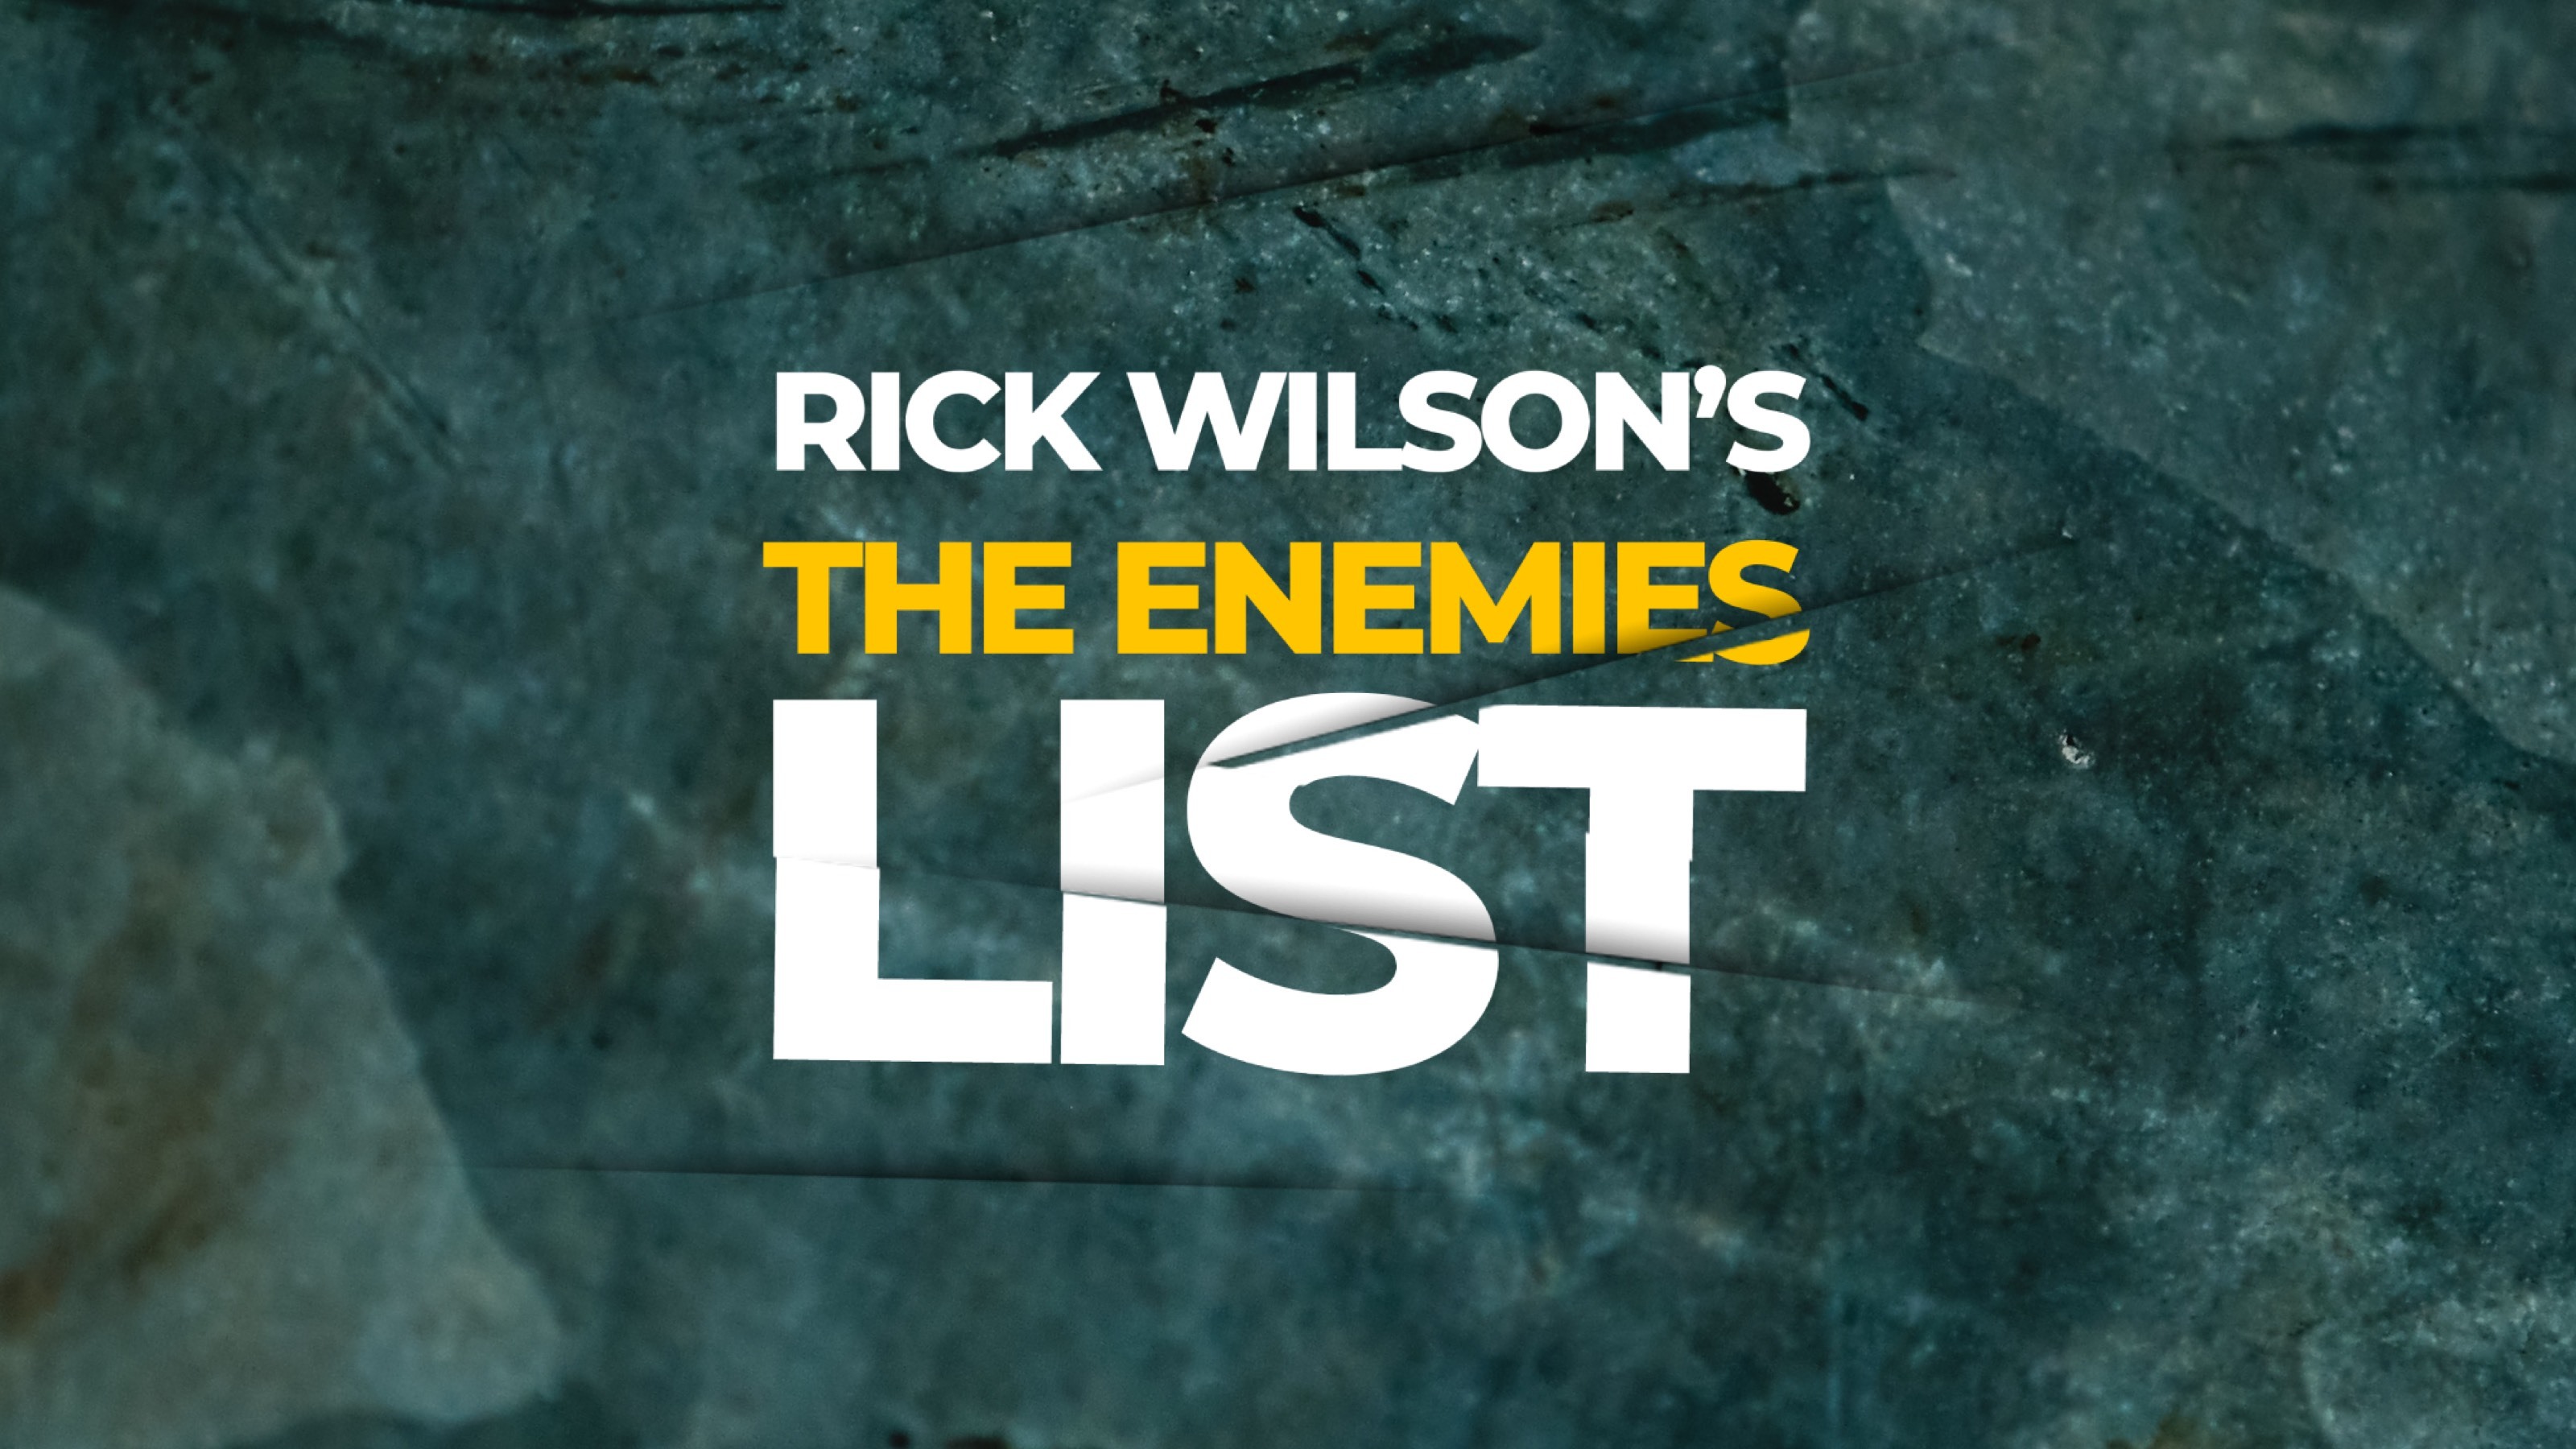 Rick Wilson's The Enemies List